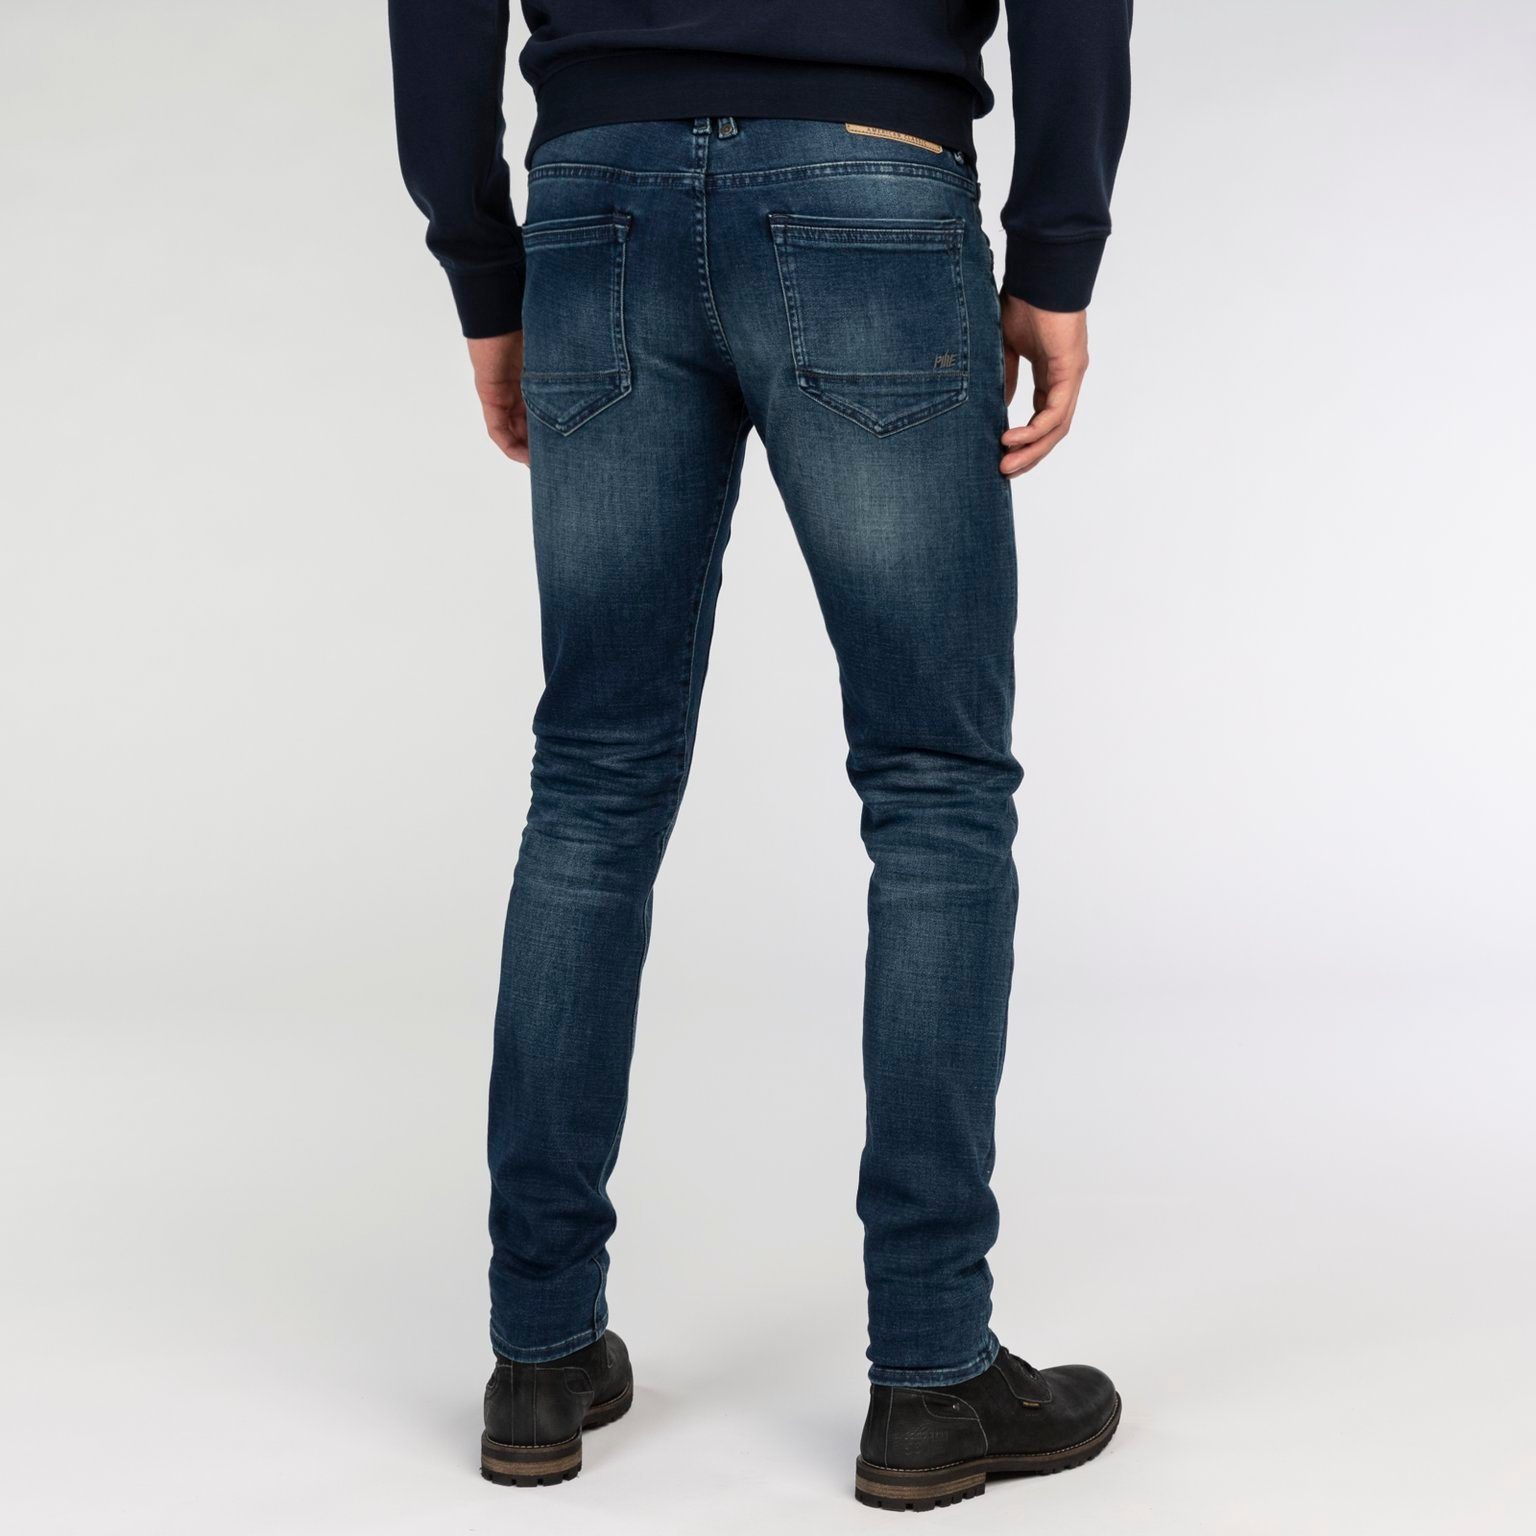 LEGEND PTR140-DBI PME blue 5-Pocket-Jeans dark PME LEGEND TAILWHEEL indigo